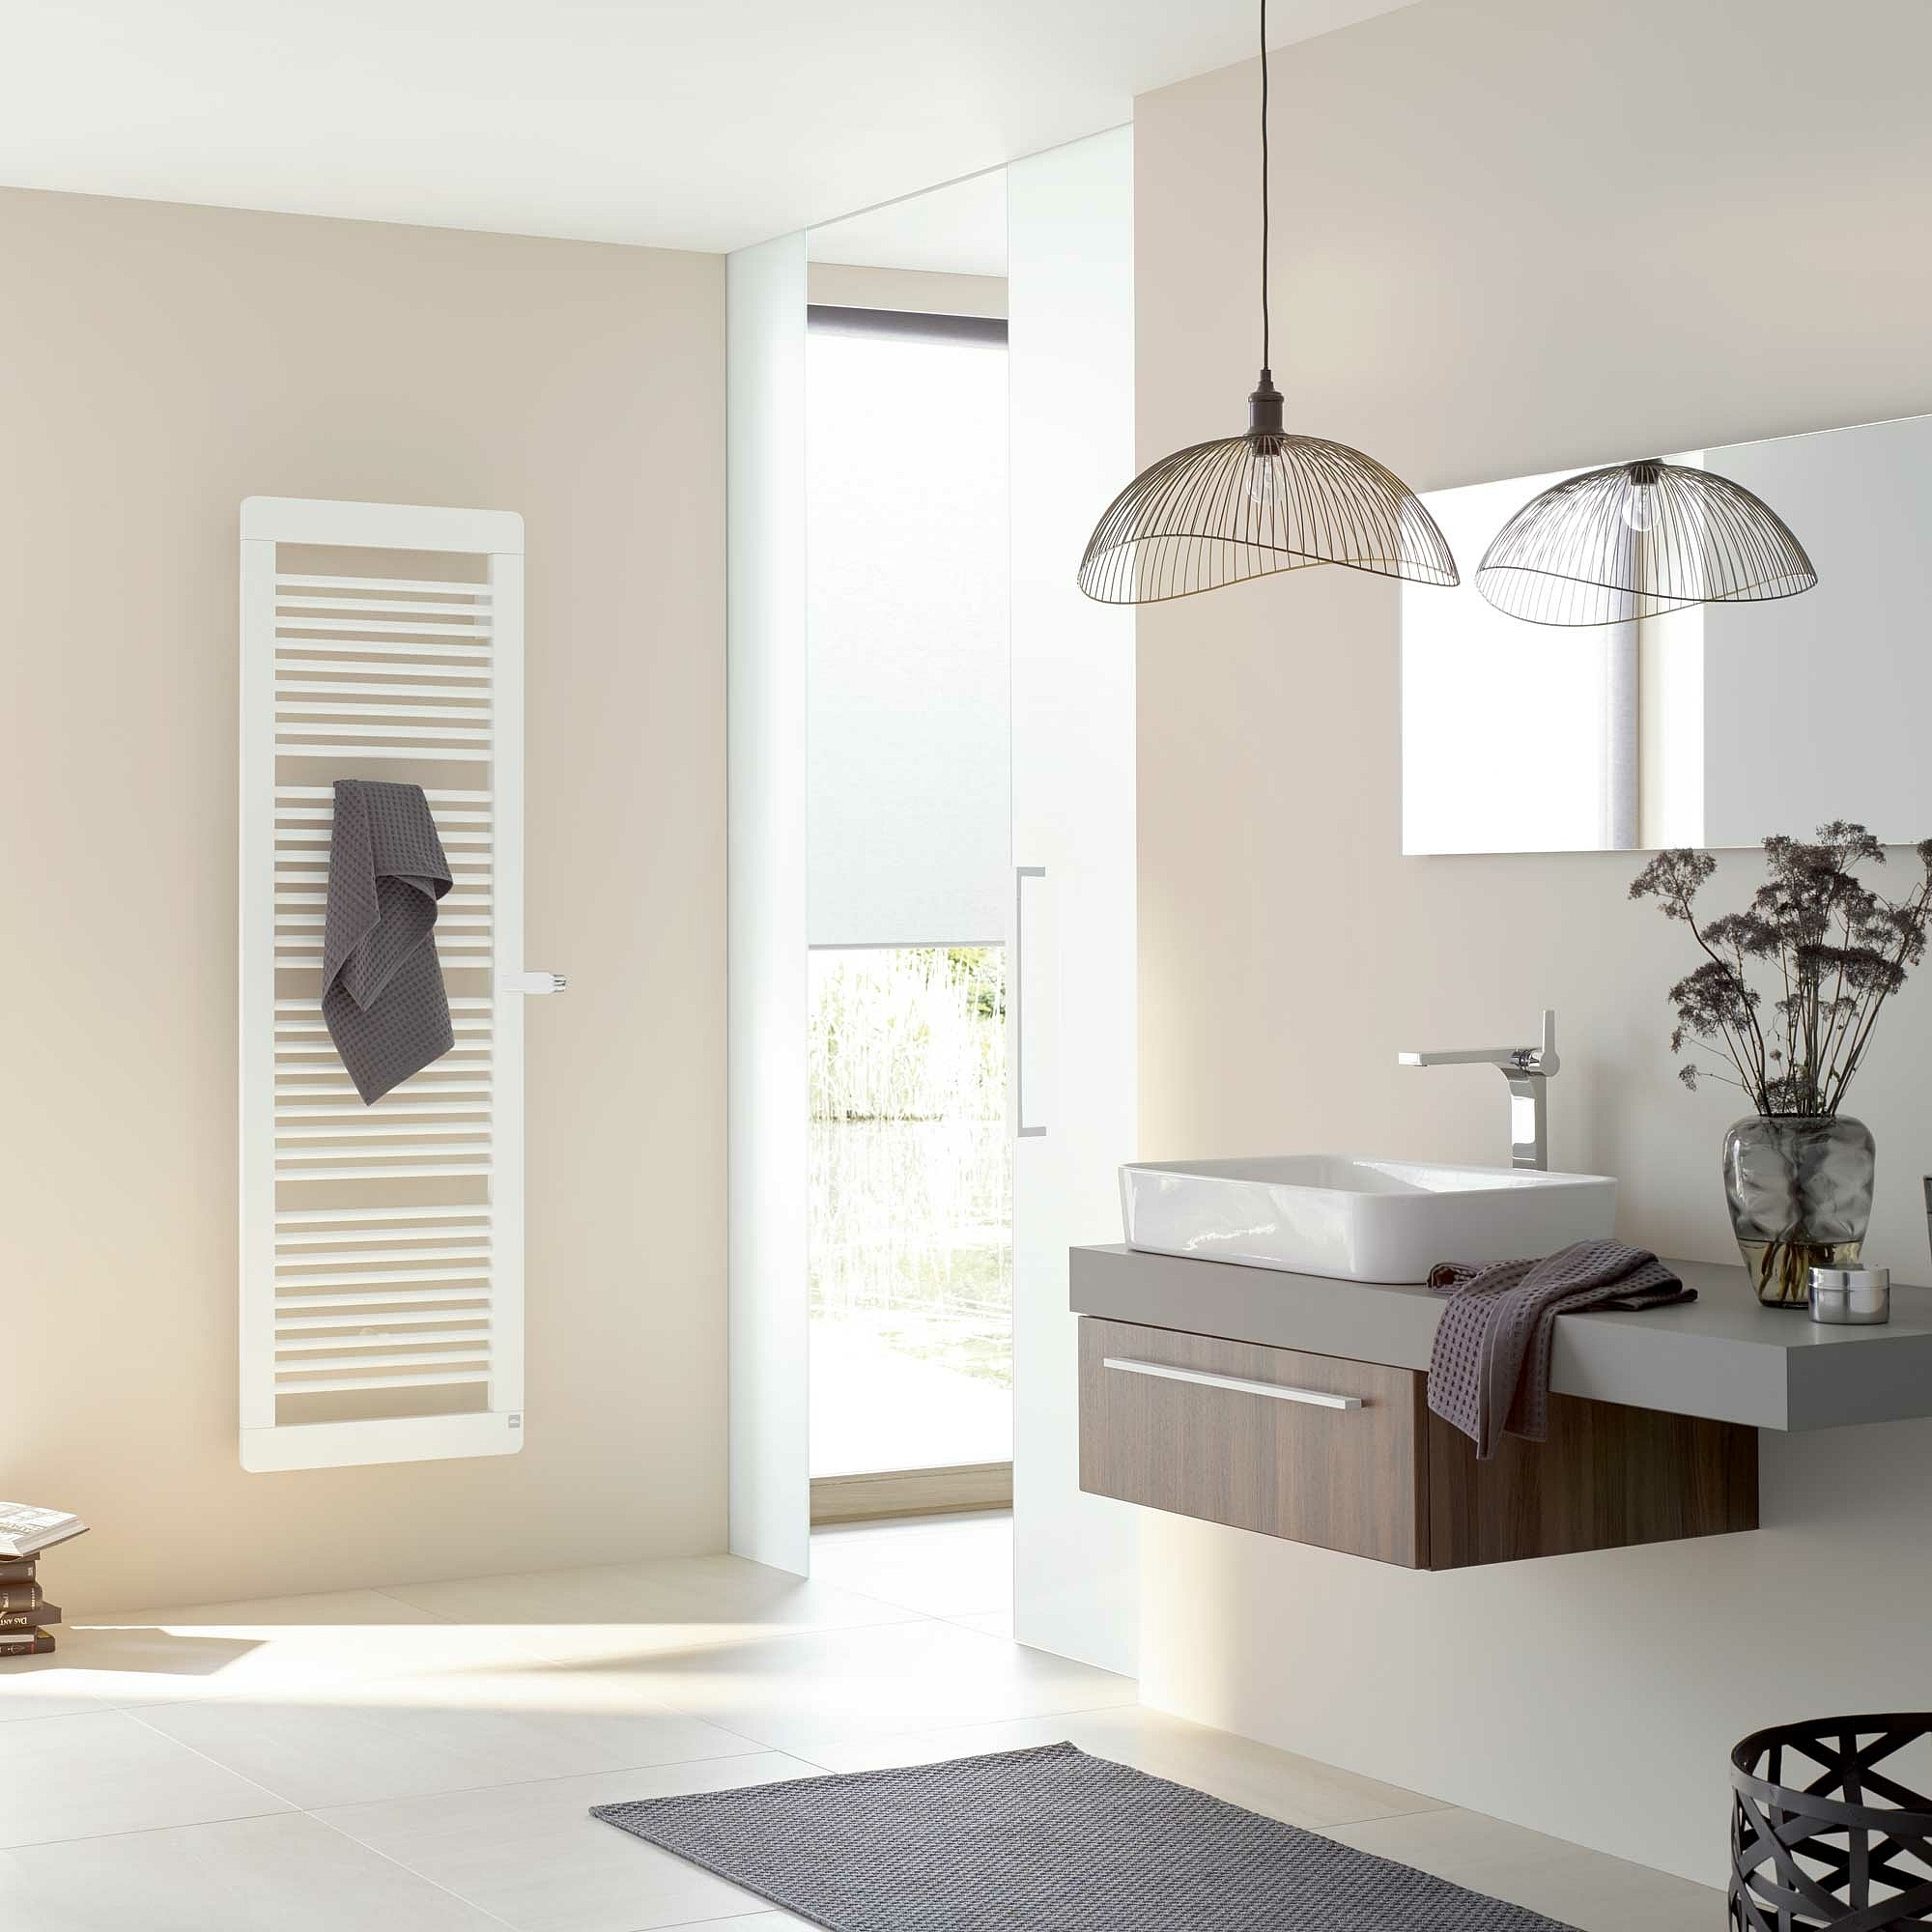 Kermi Credo plus design and bathroom radiators with slender heating pipes. 